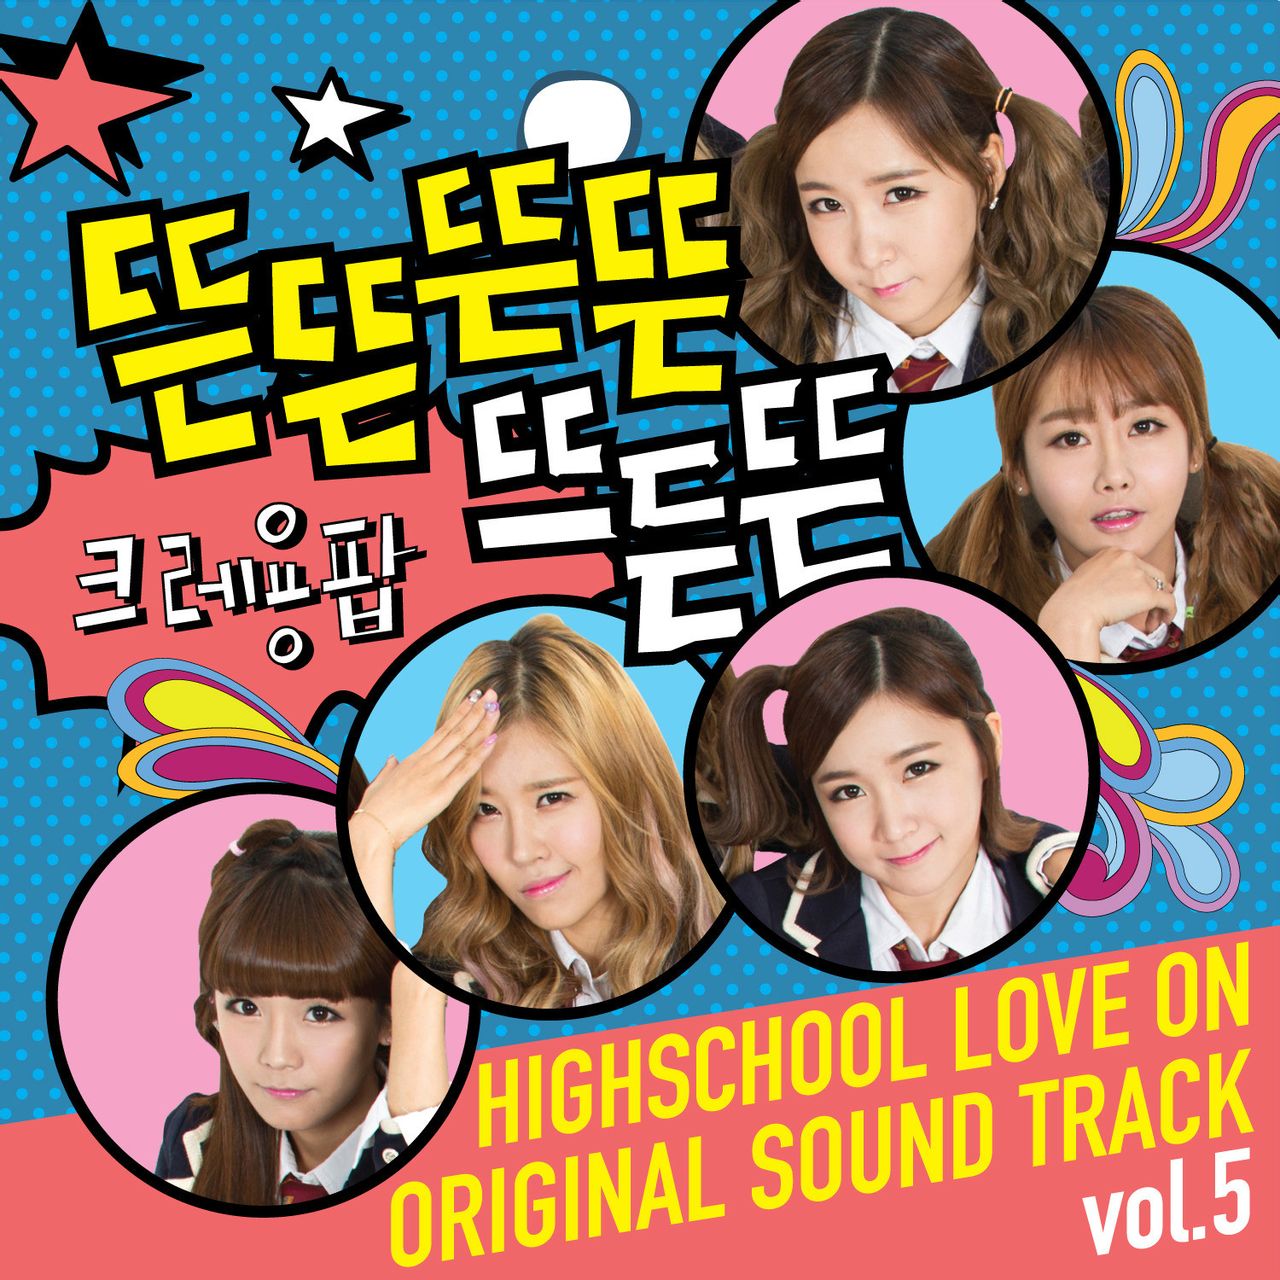 High School: Love On OST Vol.5